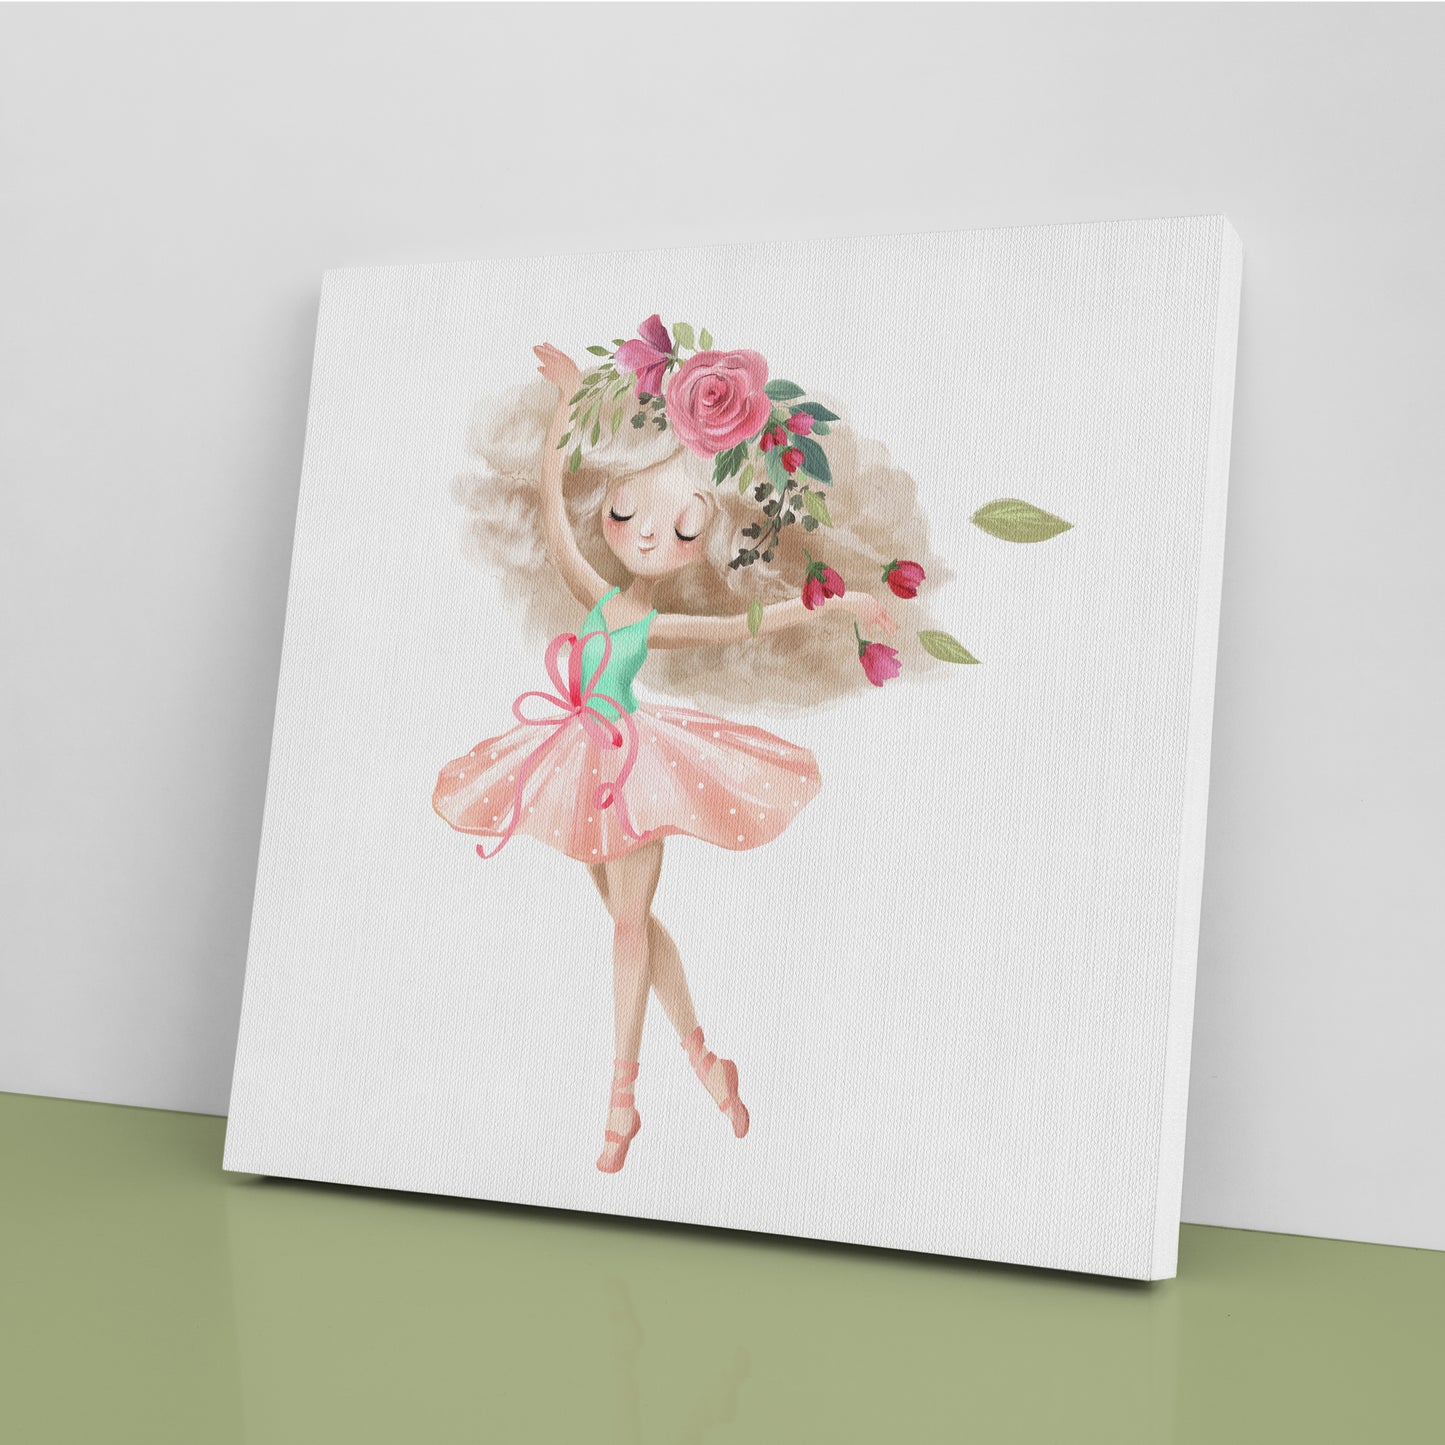 Cute Ballerina with Flowers Canvas Print ArtLexy   